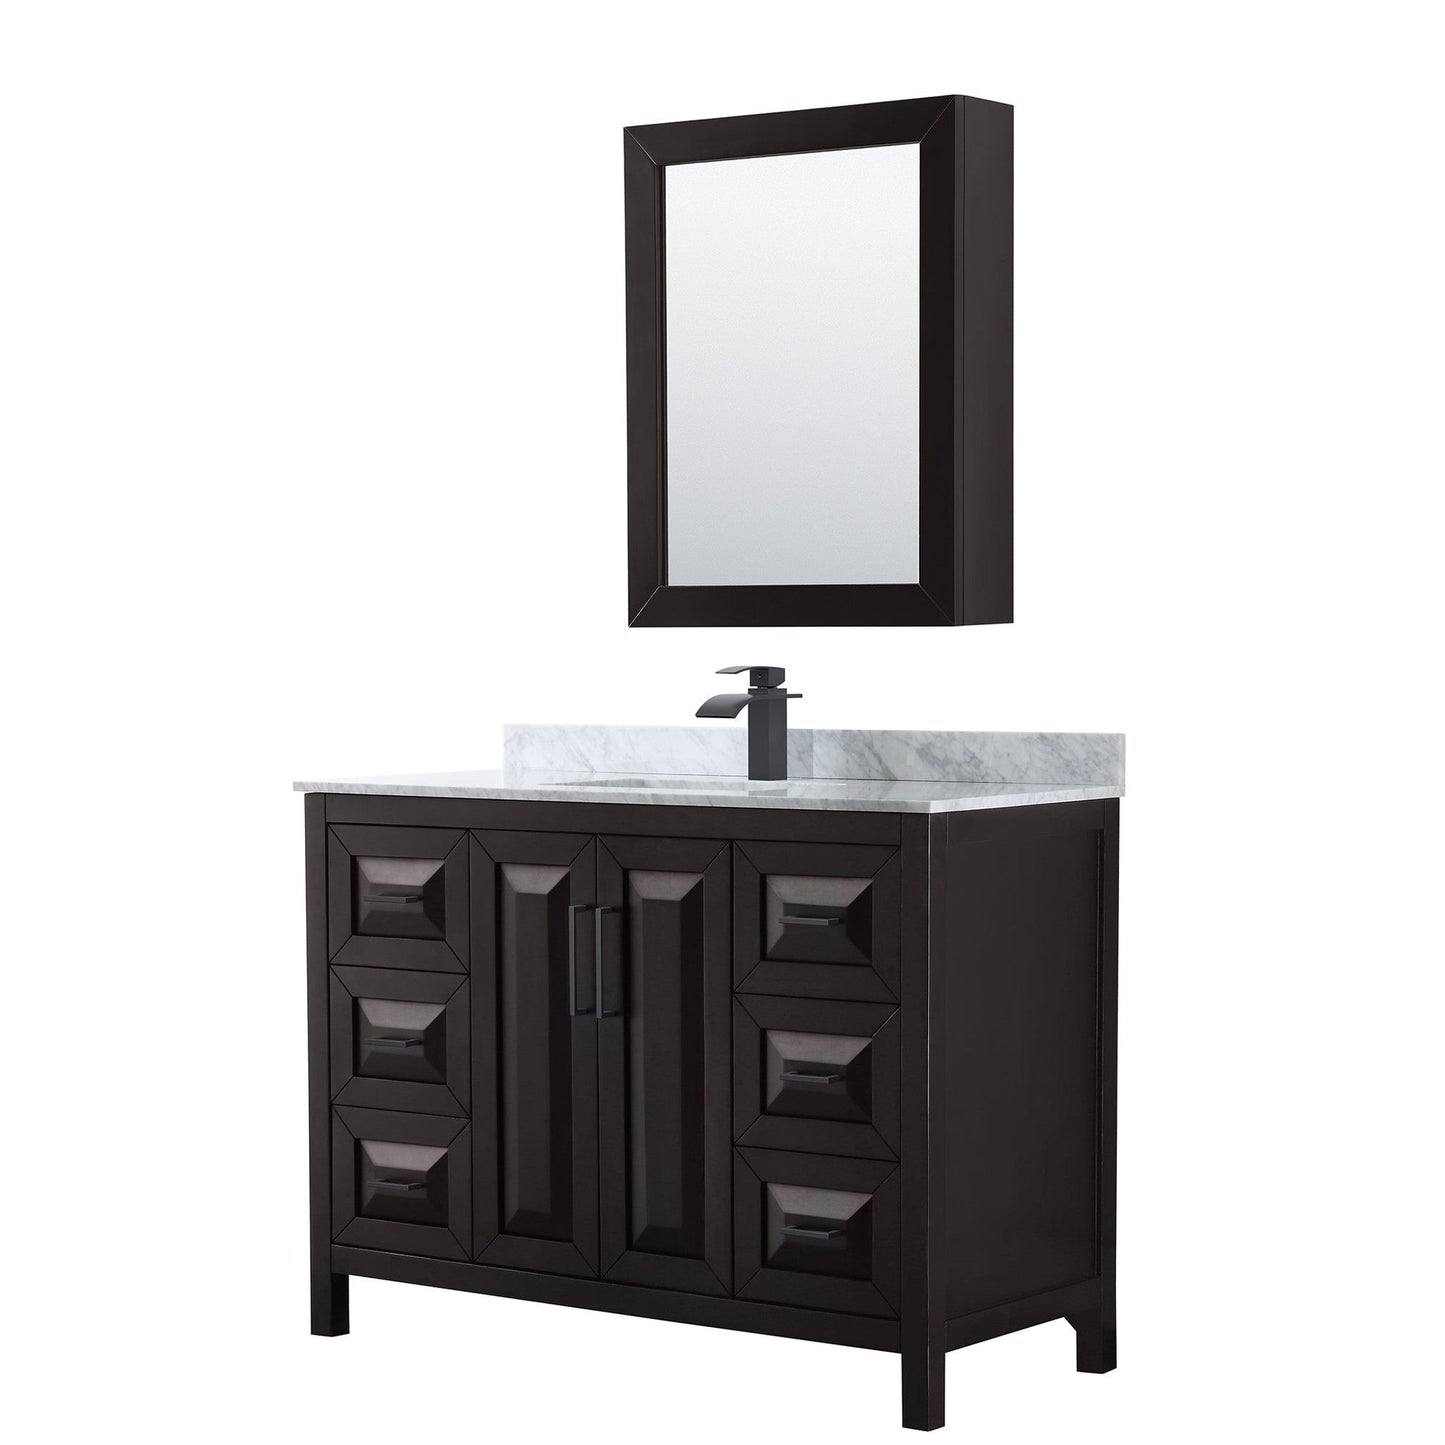 Daria 48" Single Bathroom Vanity in Dark Espresso, White Carrara Marble Countertop, Undermount Square Sink, Matte Black Trim, Medicine Cabinet